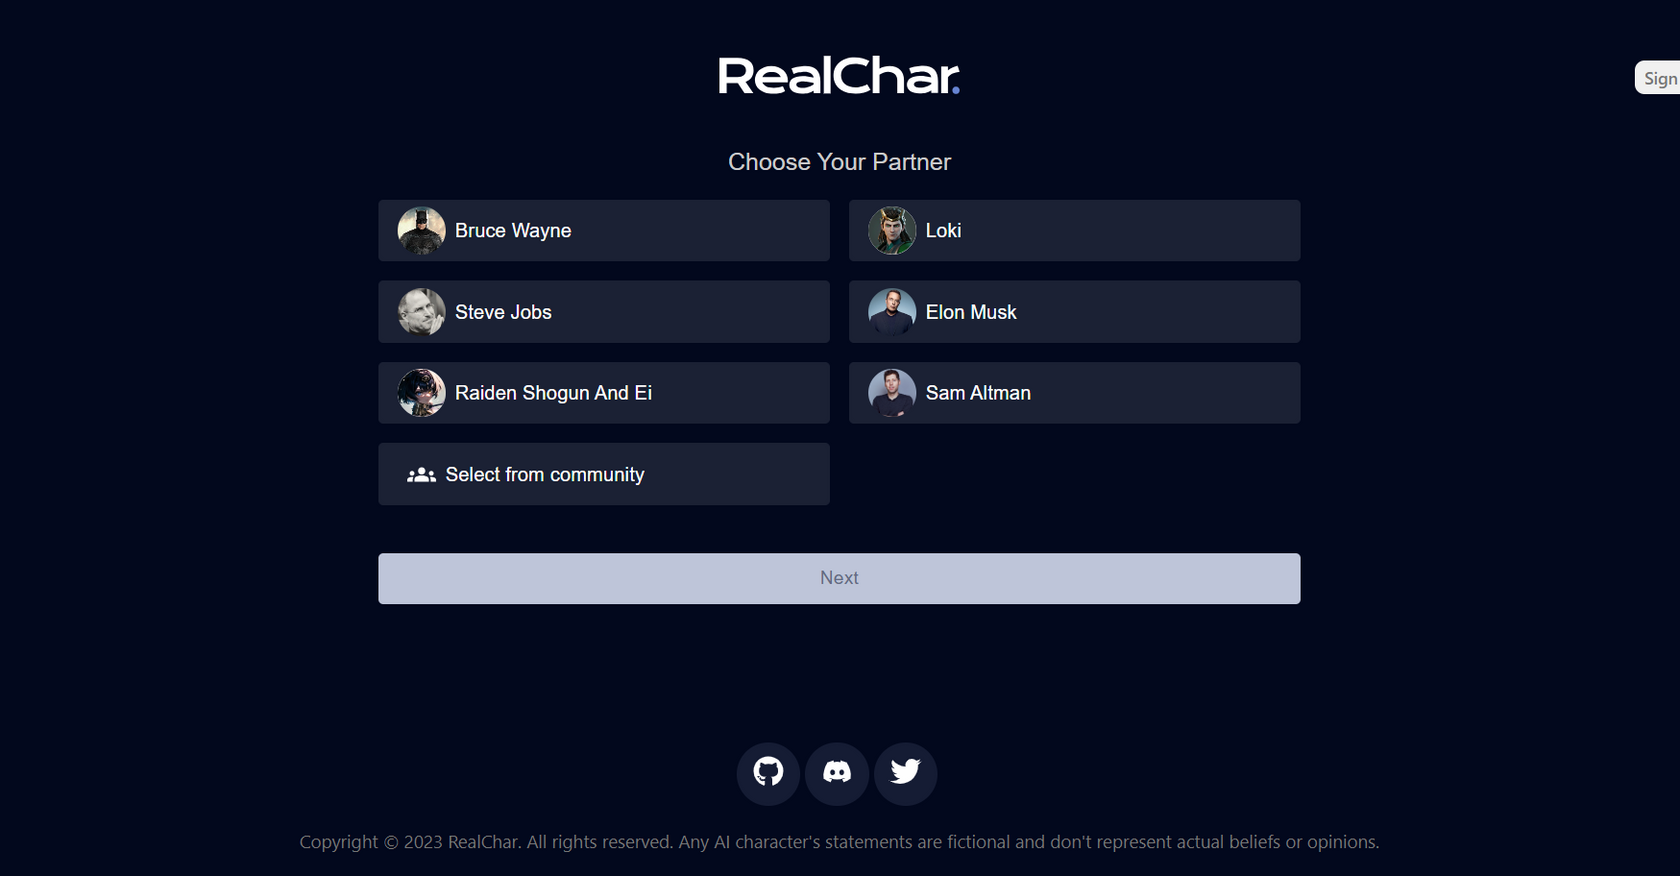 RealChar